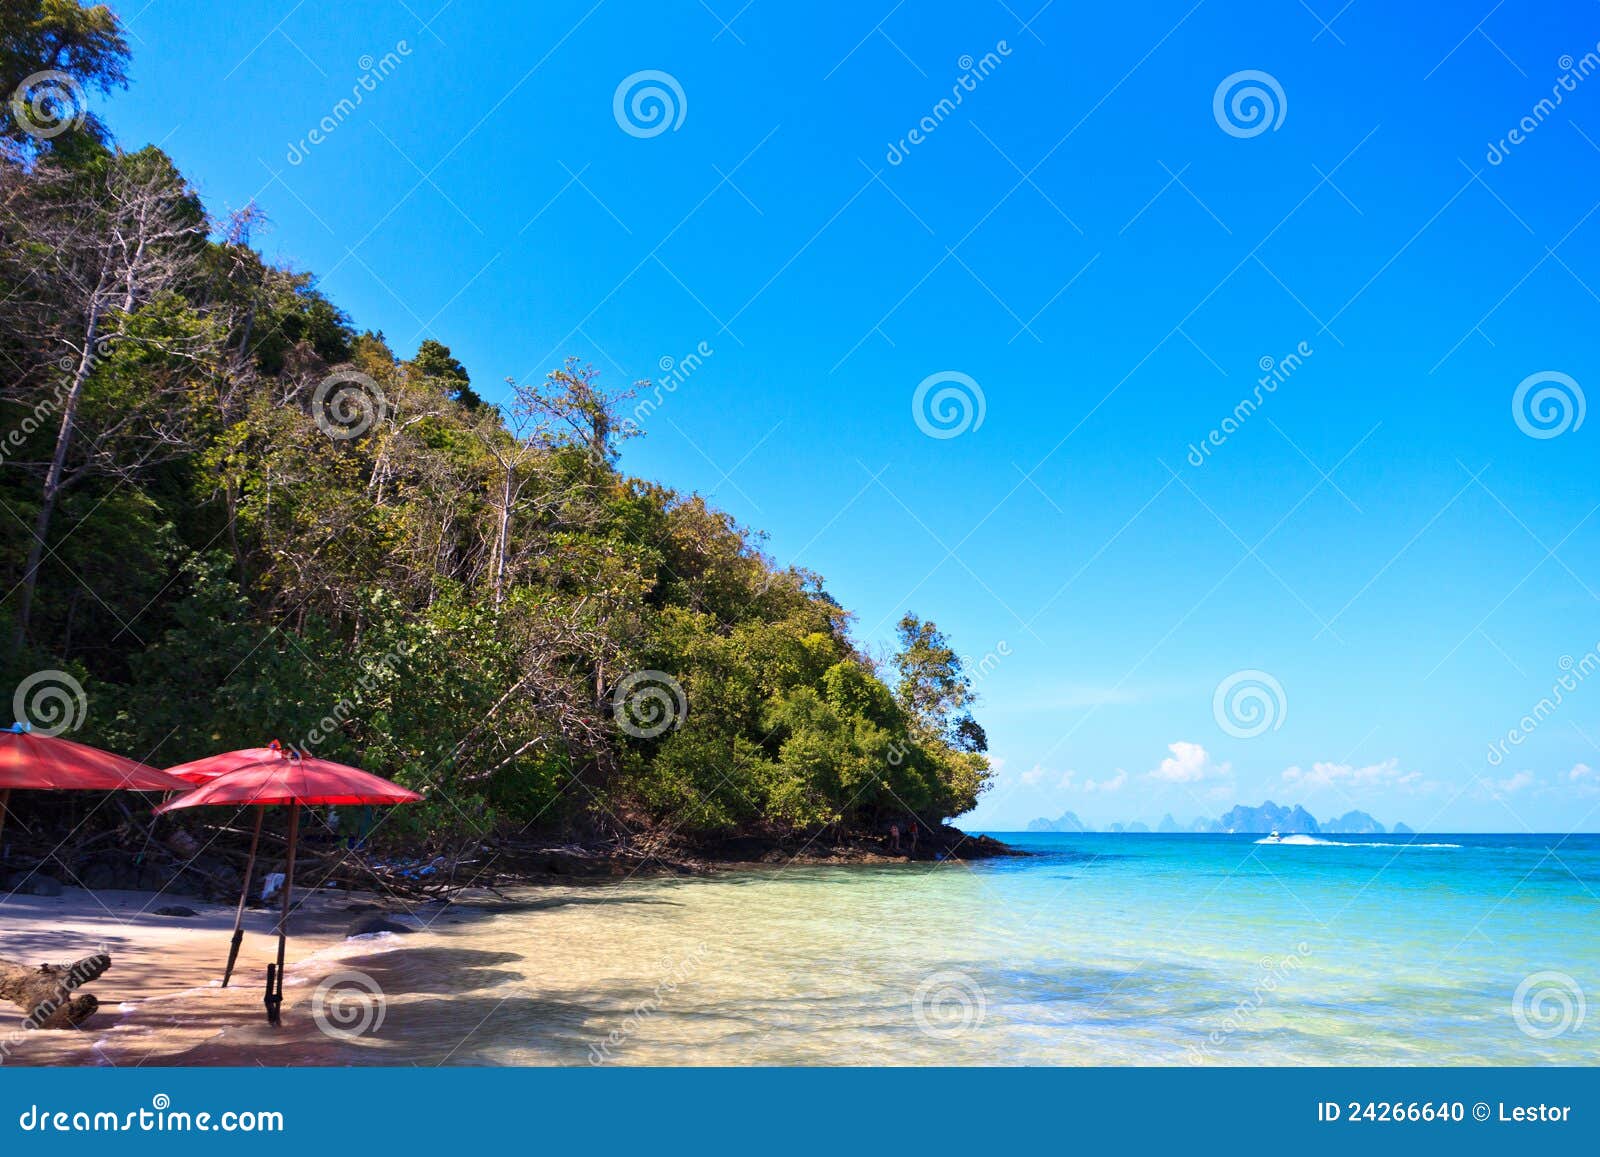 beach in a phang nga bay